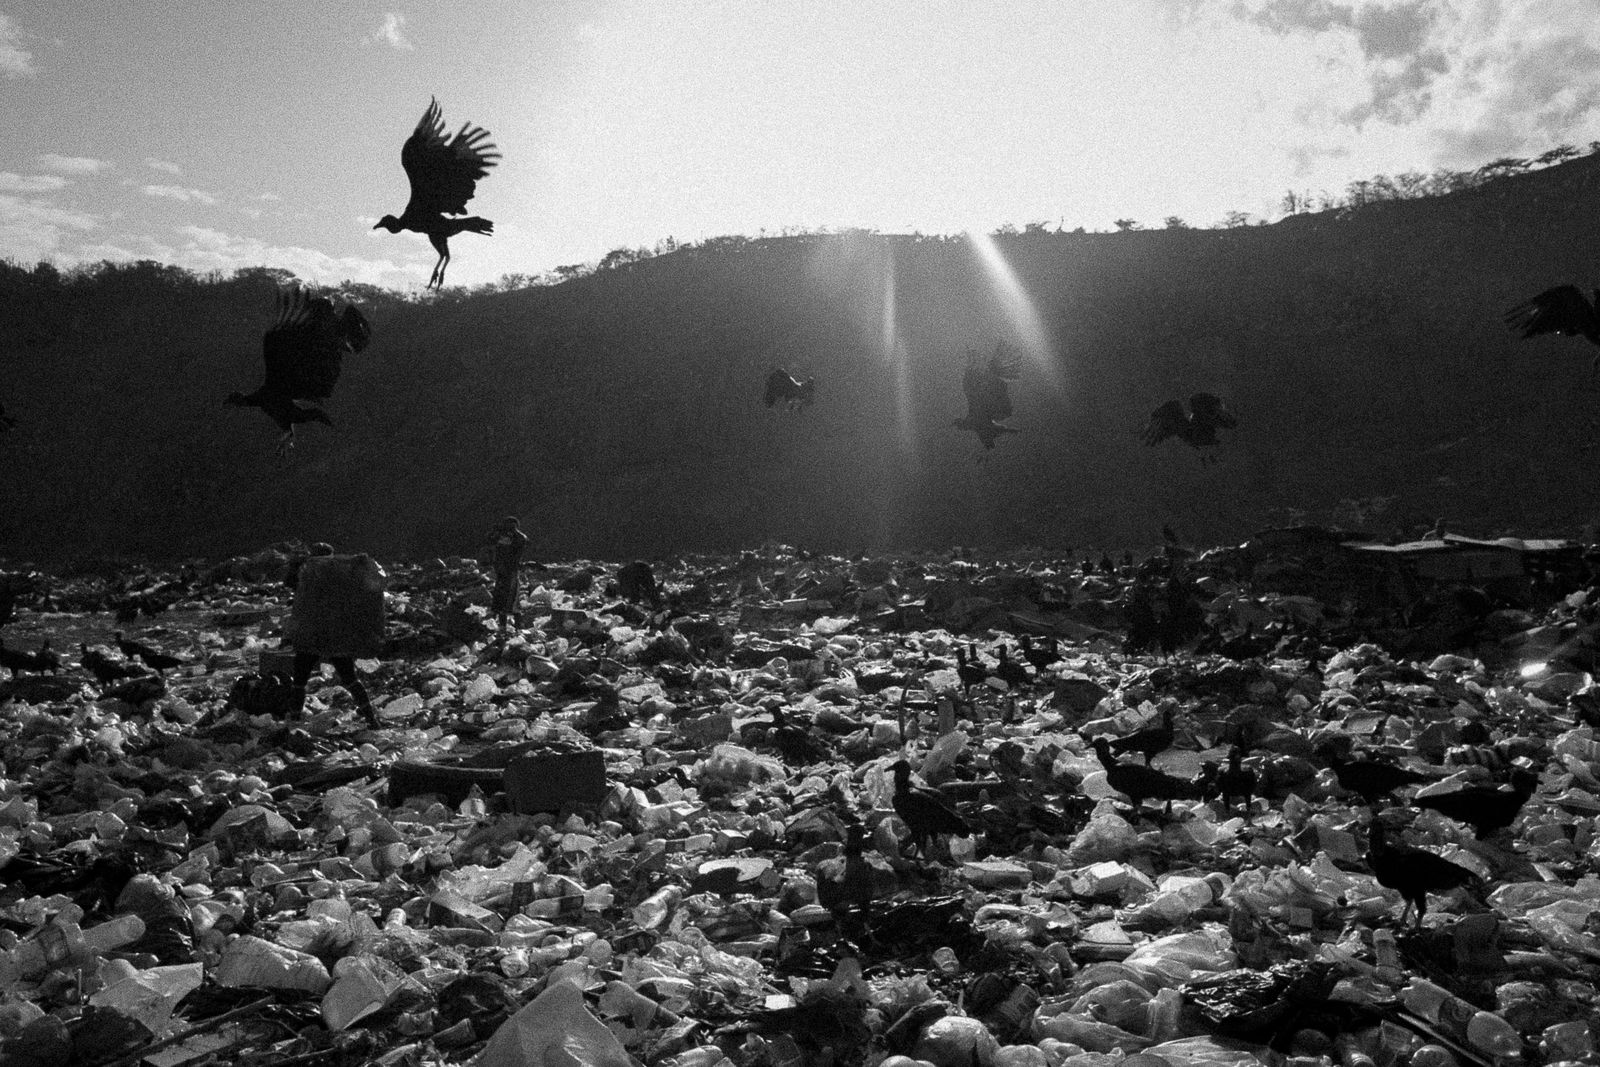 © Fabiola Ferrero - Image from the Venezuela: Blurred in despair photography project